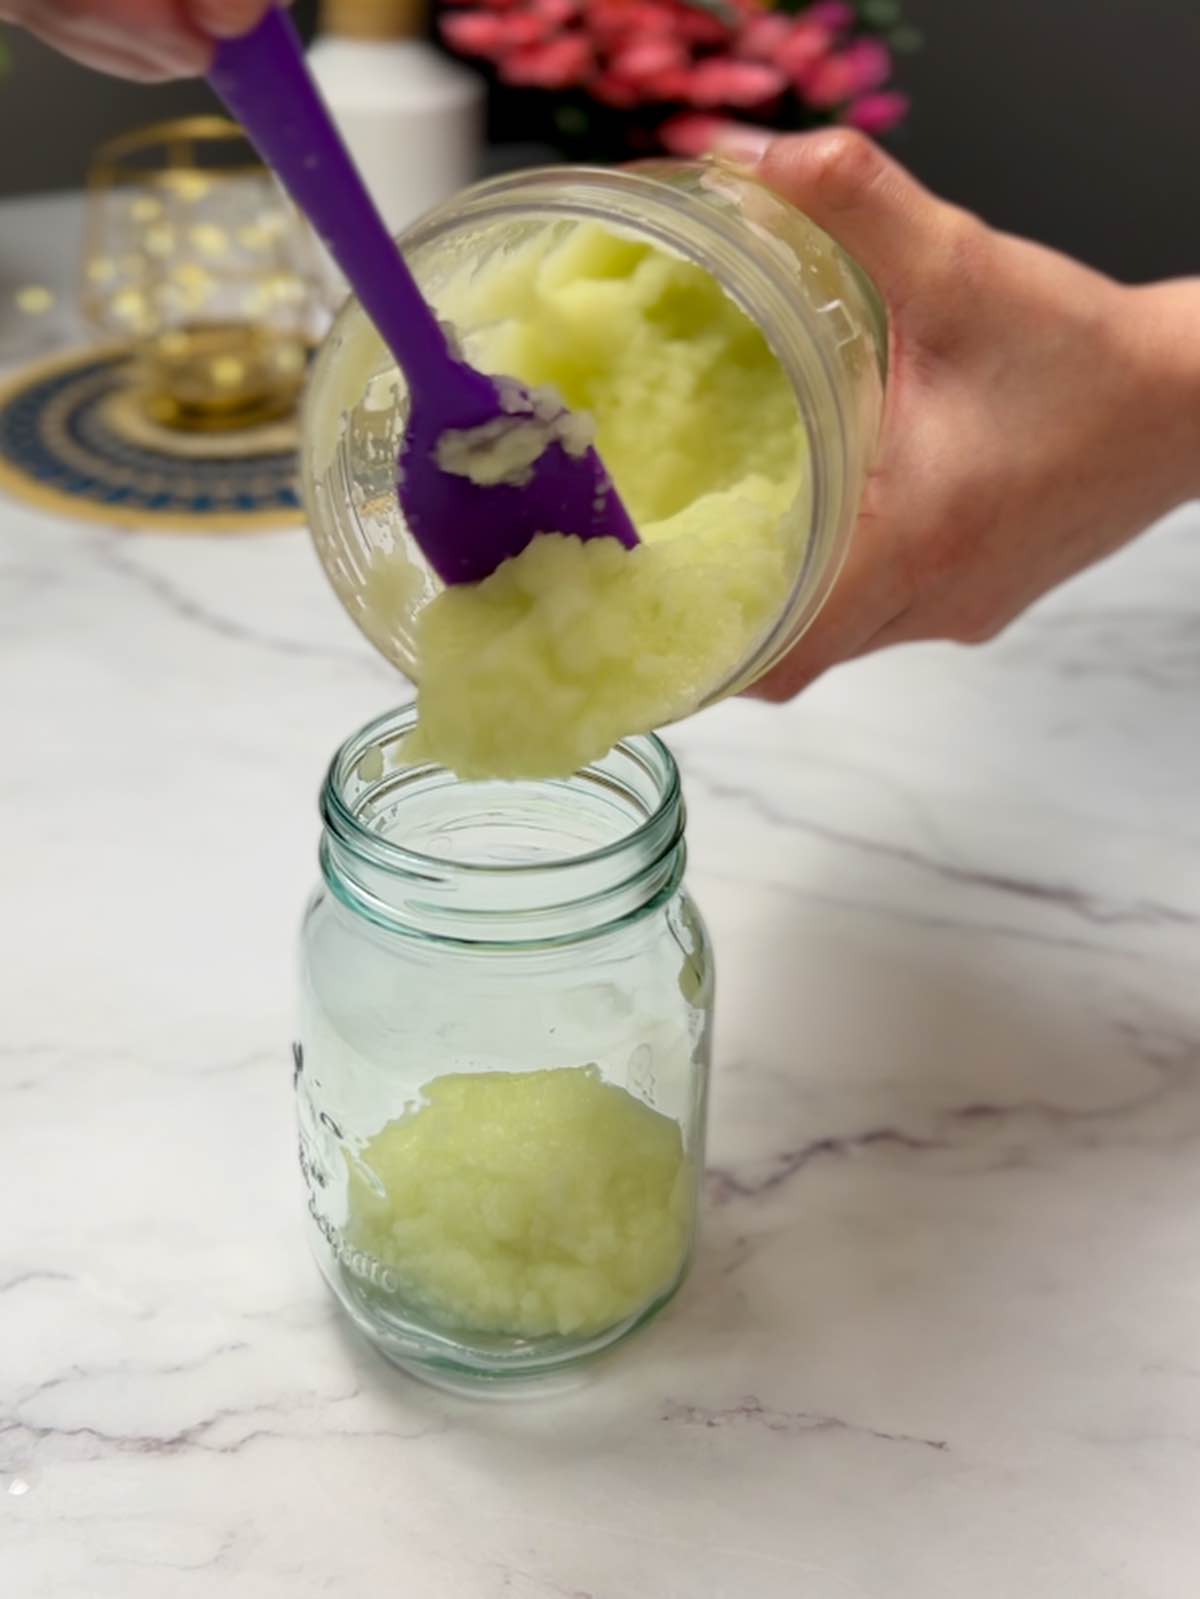 transferring papaya paste from a blender jar to a glass jar